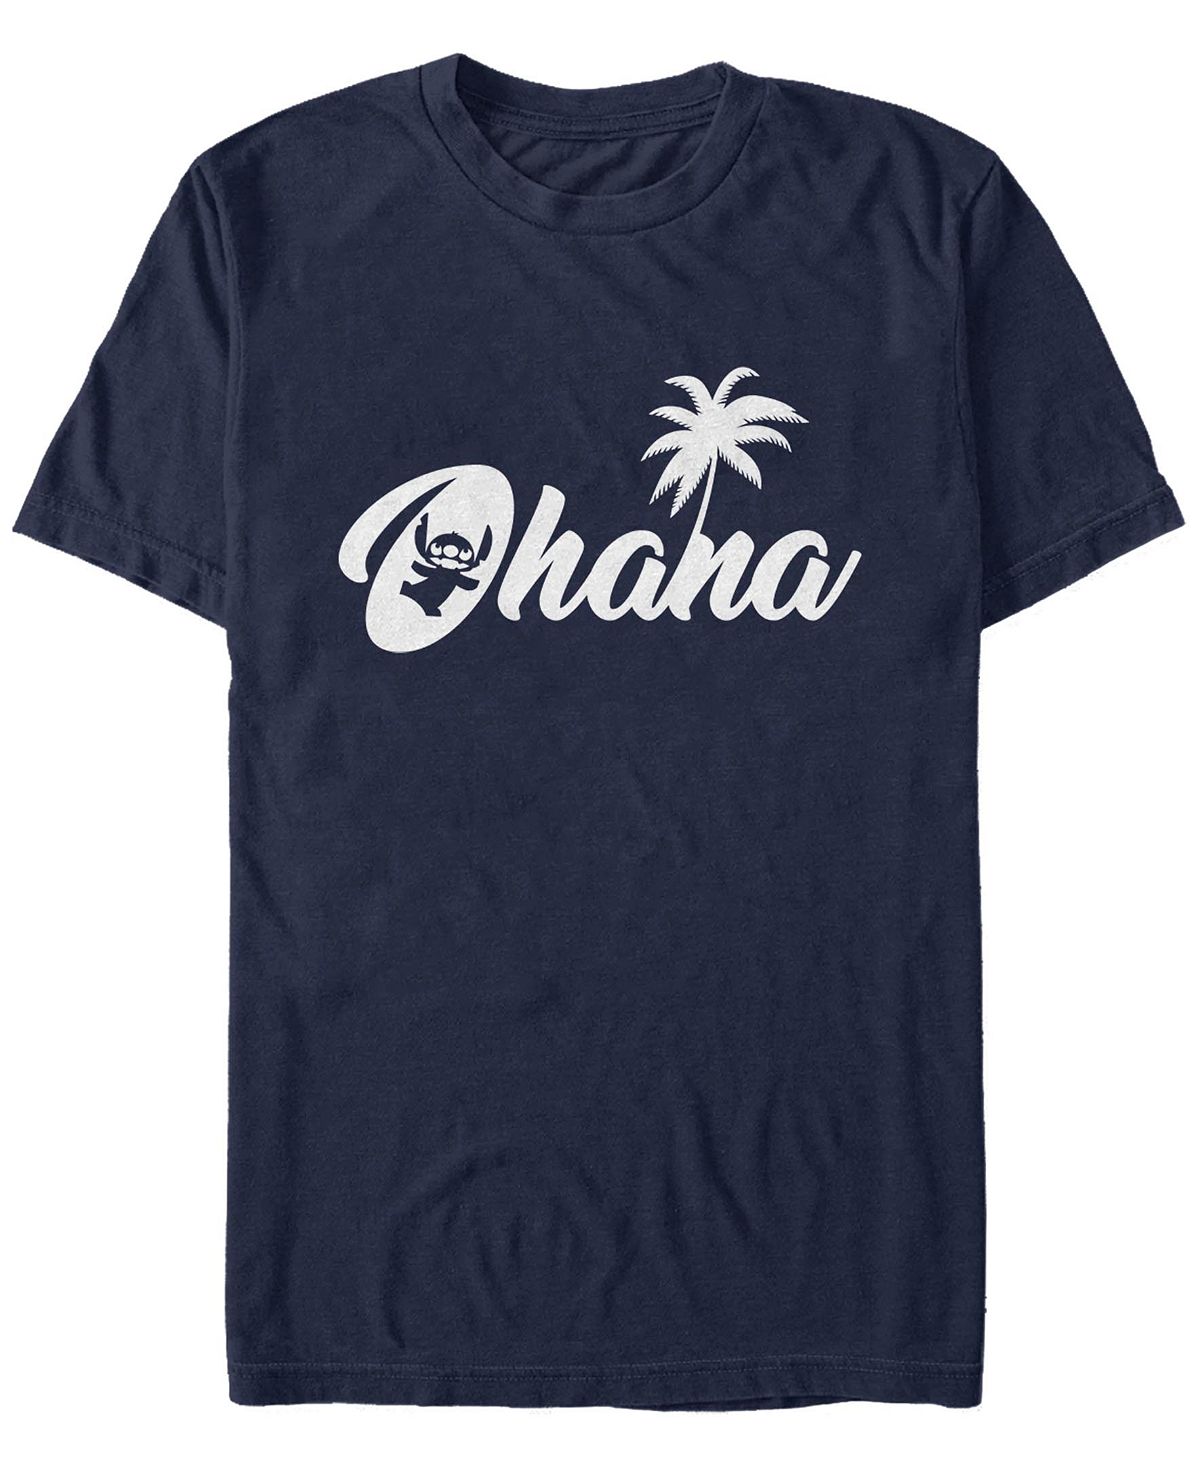 Мужская футболка с короткими рукавами stitch ohana Fifth Sun, синий мужская футболка с короткими рукавами и сердечками fifth sun синий